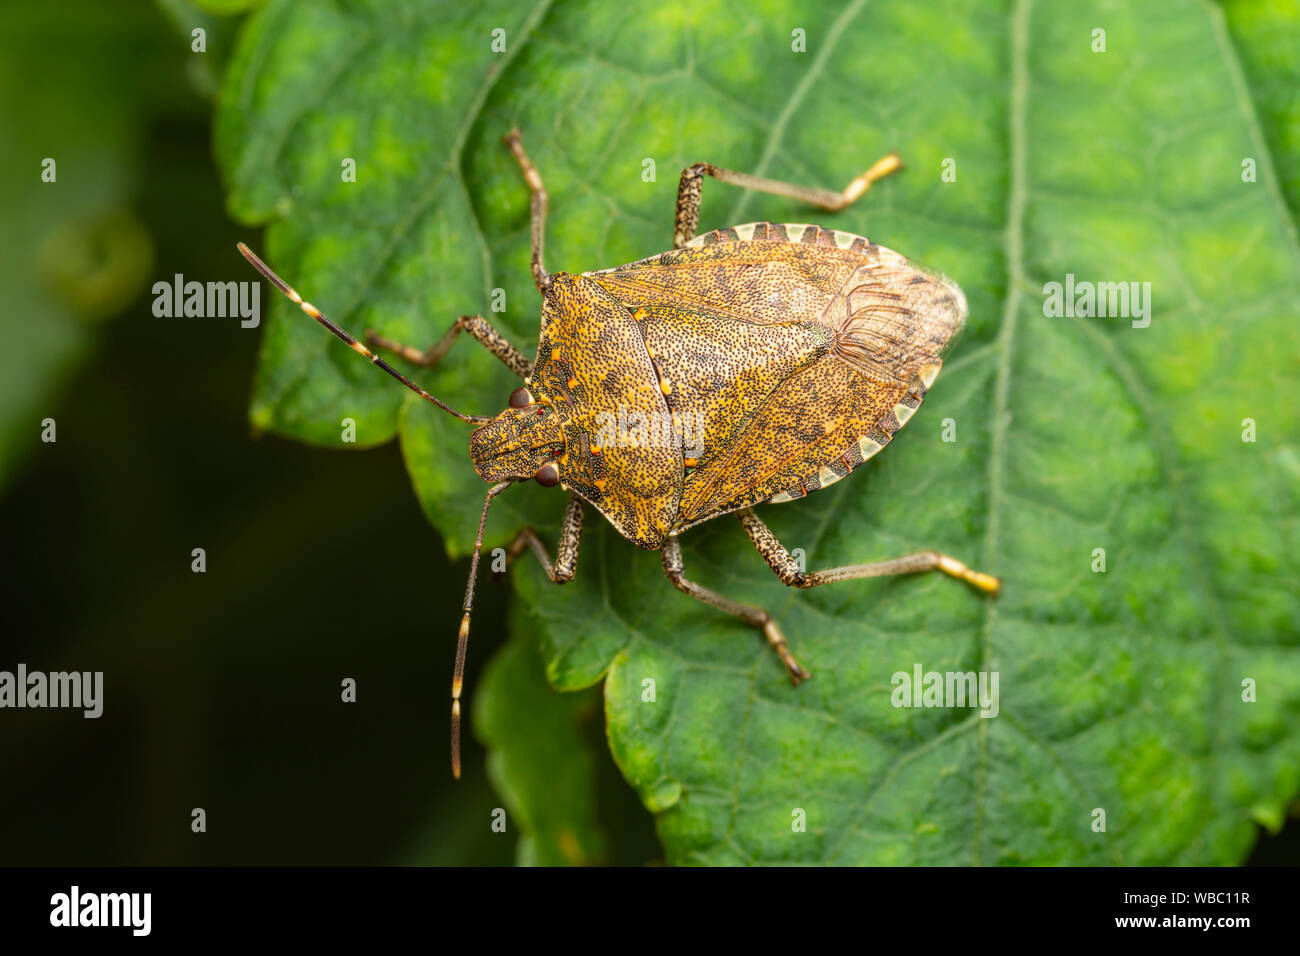 Braun Marmorated stinken Bug (Halyomorpha halys) Stockfoto